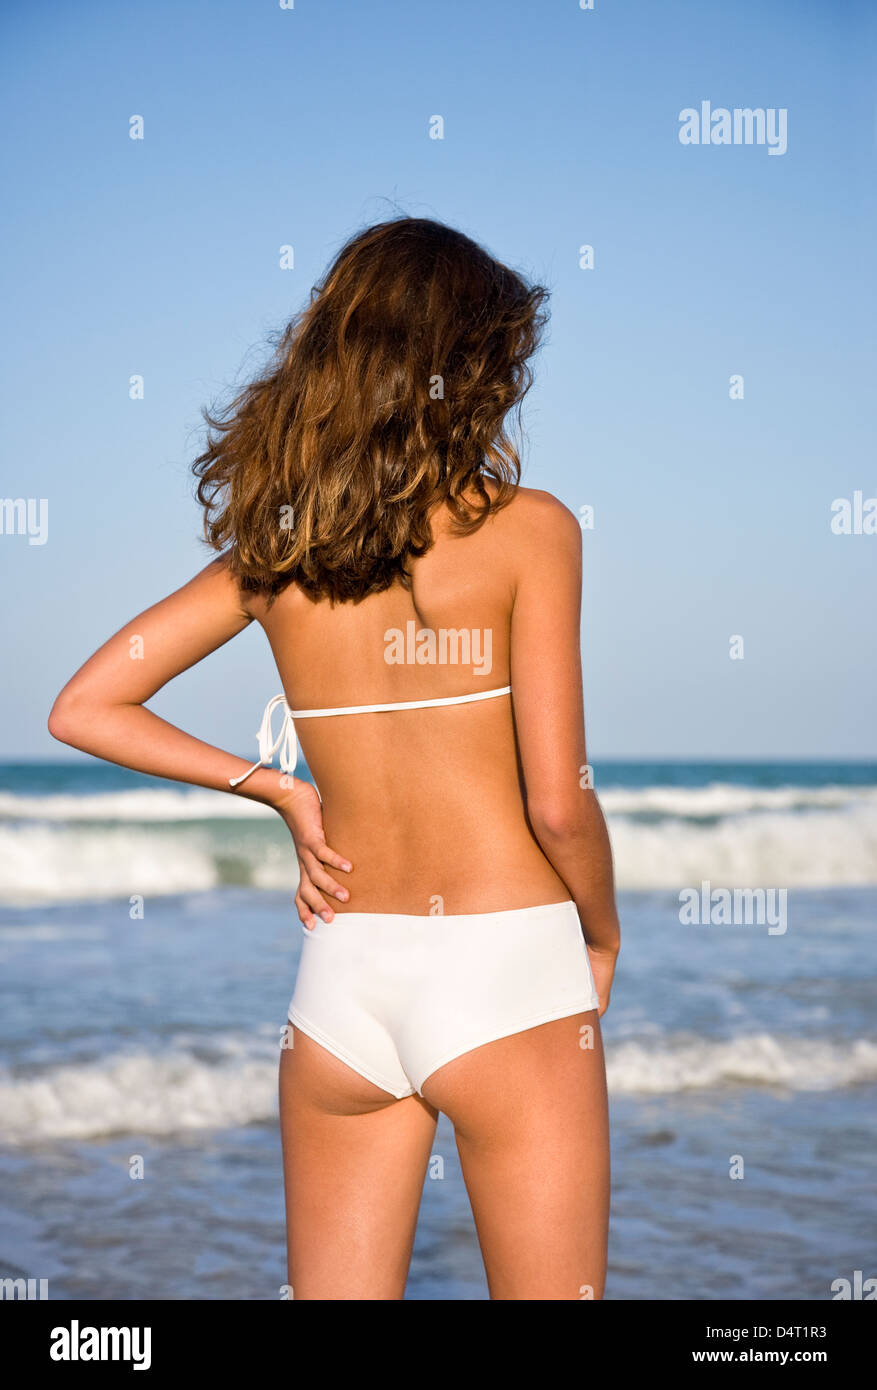 Teenage Girl Wearing White Bikini on Beach Stock Photo - Alamy